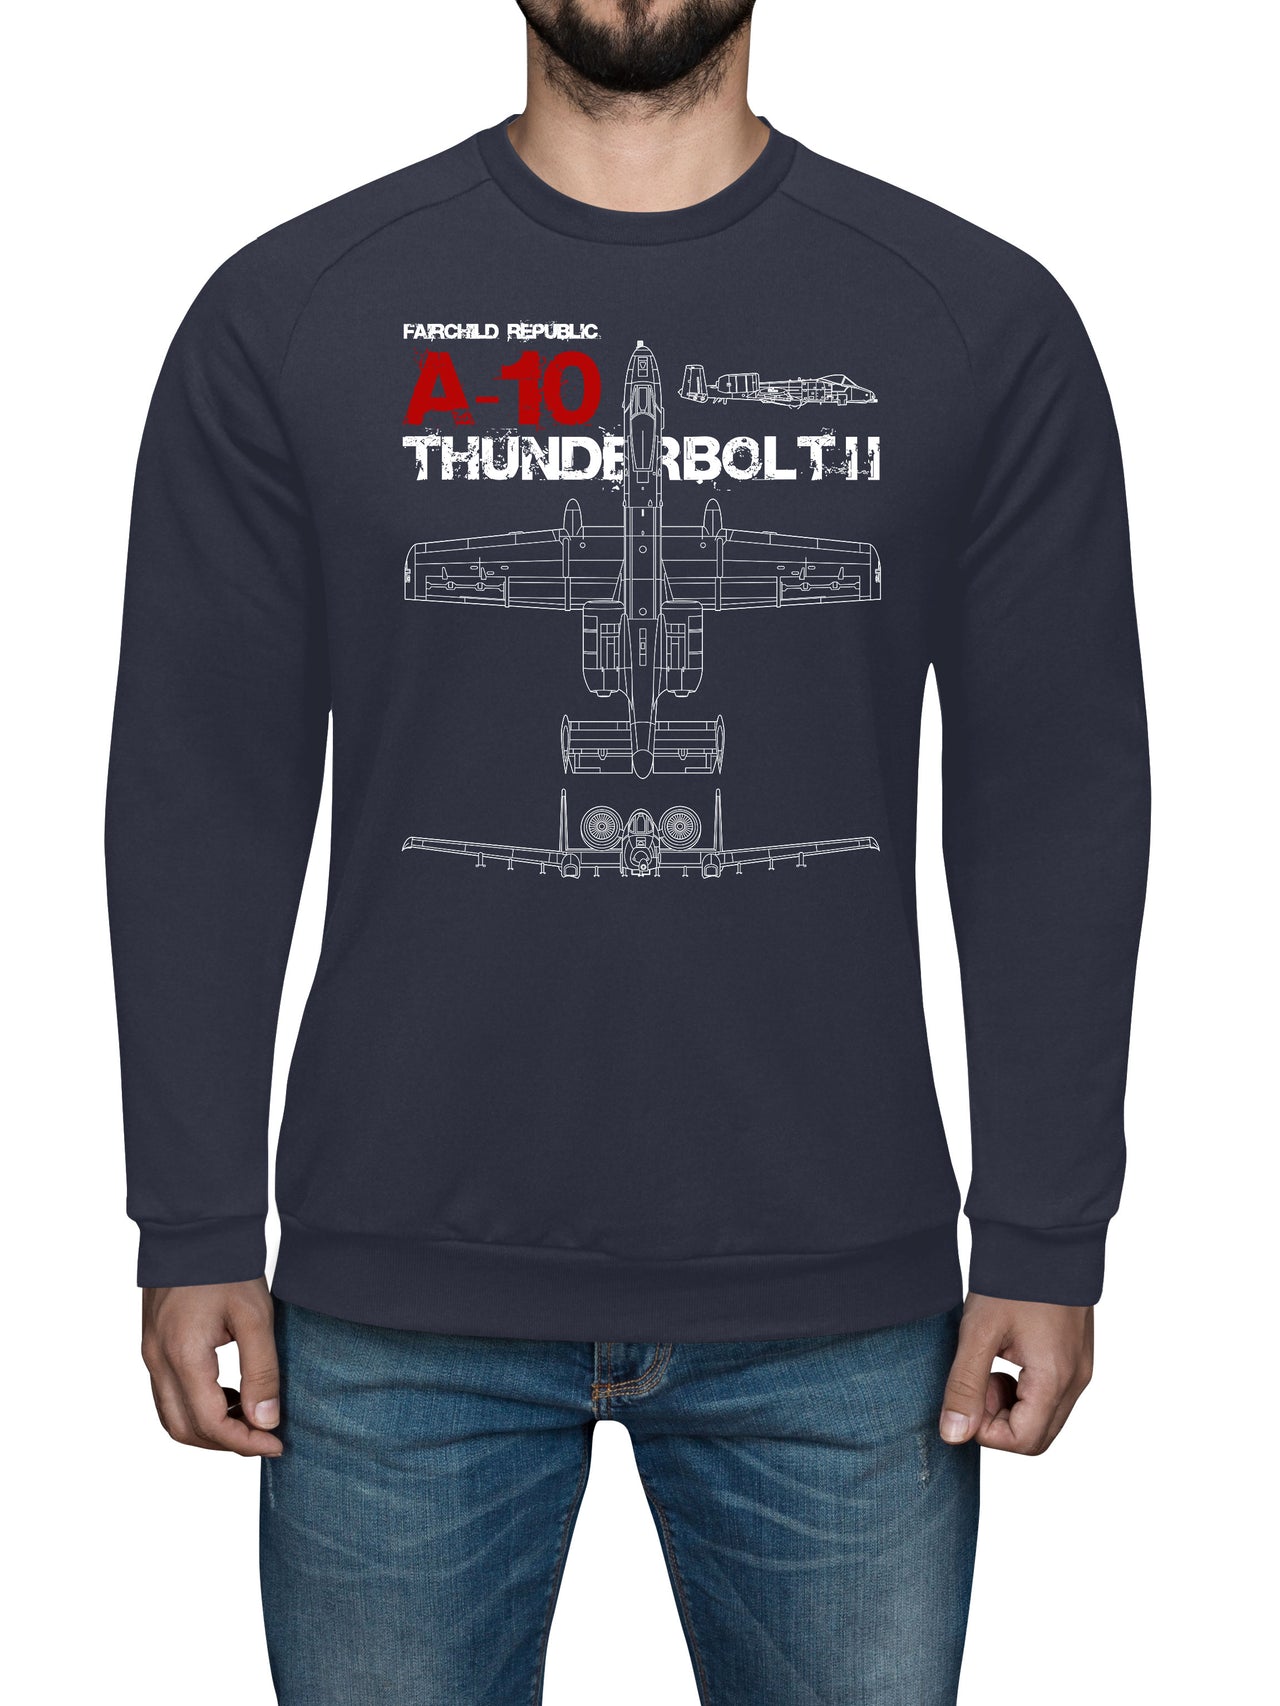 A-10 Thunderbolt II - Sweat Shirt